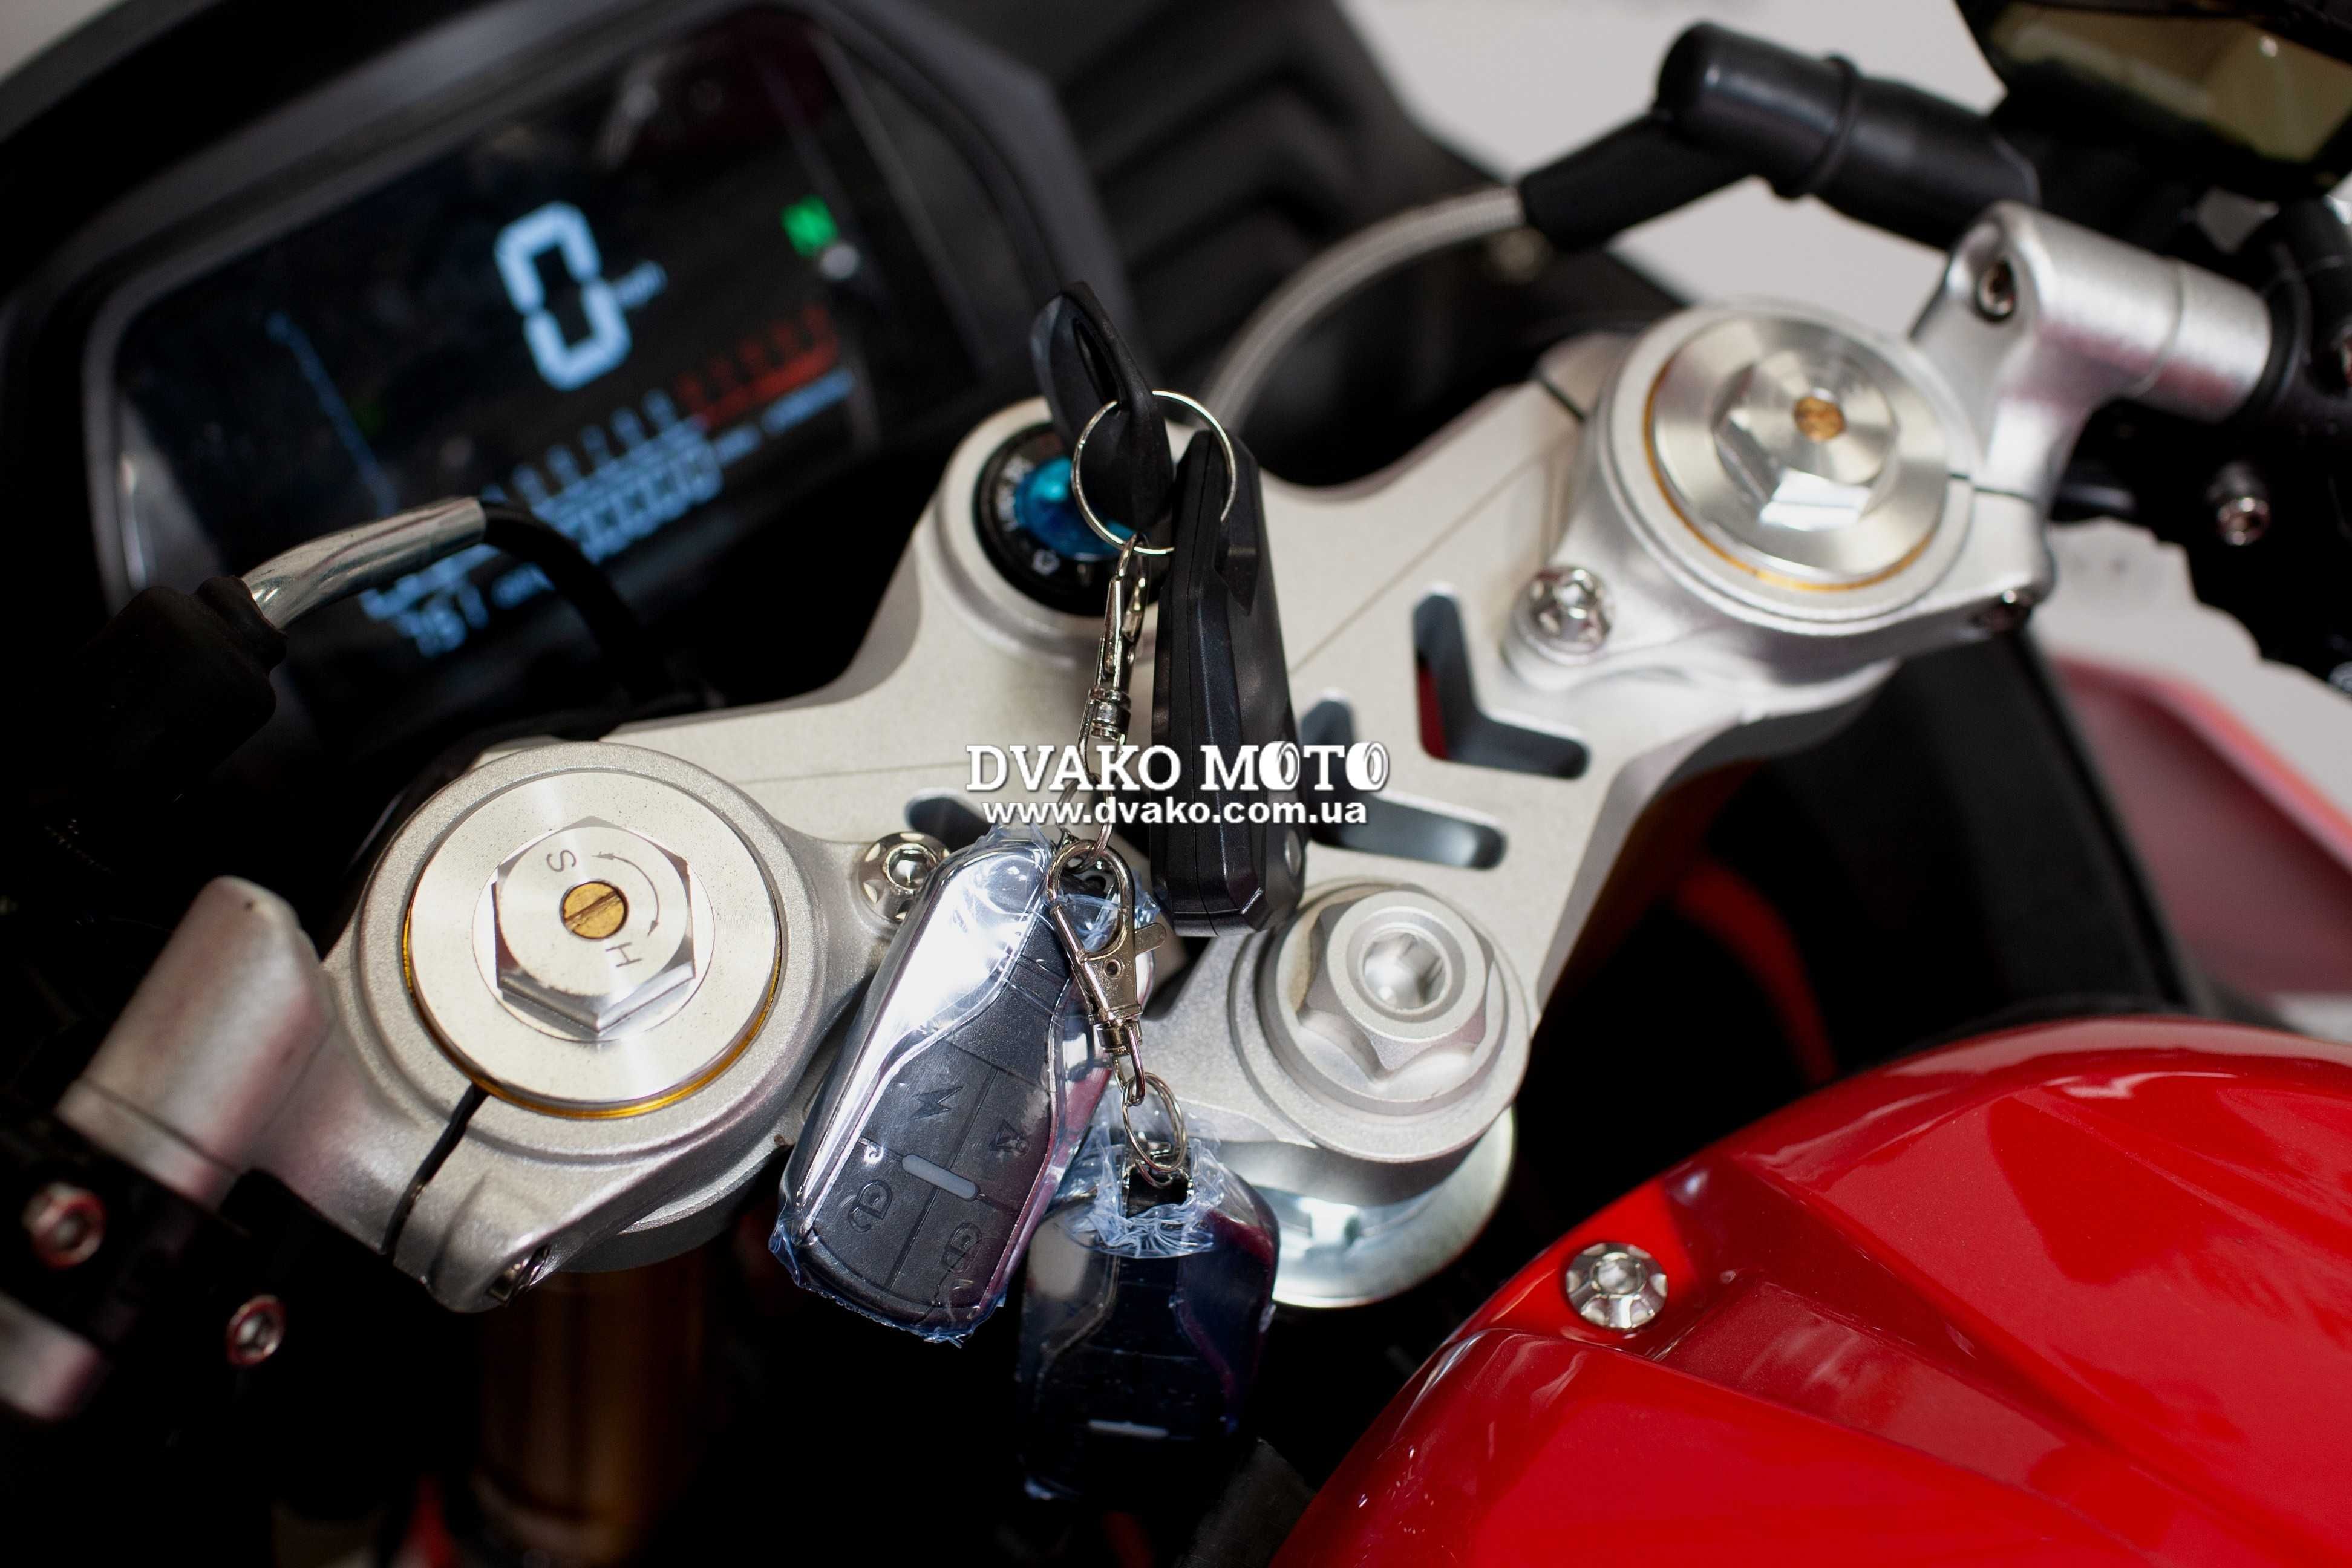 Новый Мотоцикл Rider R1M 250. Гарантия, Сервис, КРЕДИТ (Мотосалон) !